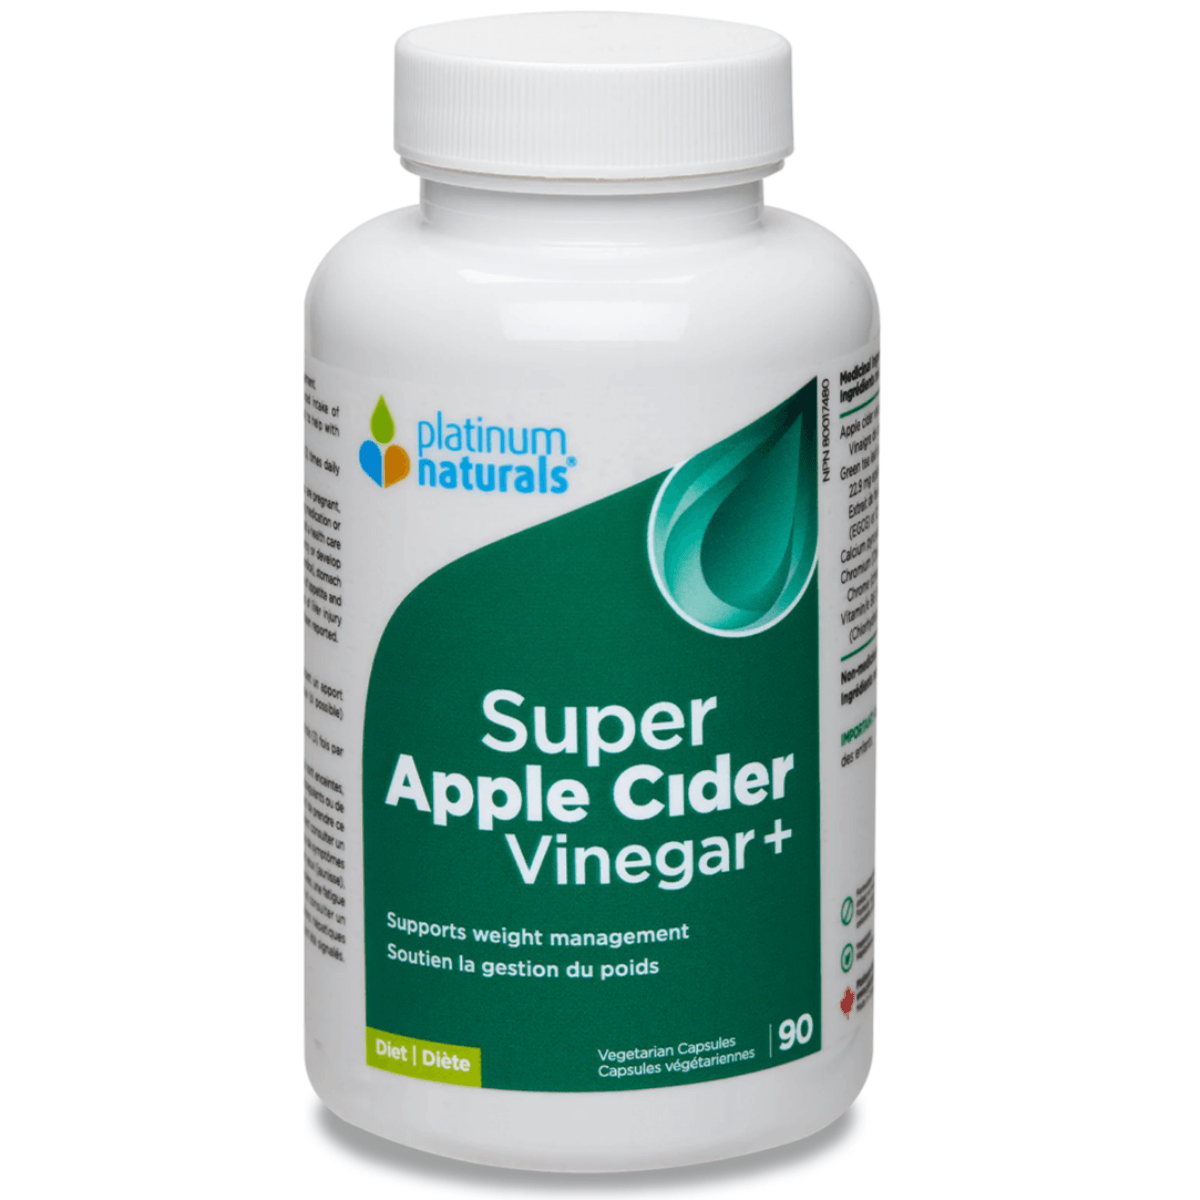 Platinum Naturals Super Apple Cider Vinegar+ 90/180 Veggie Caps Supplements - Weight Loss at Village Vitamin Store